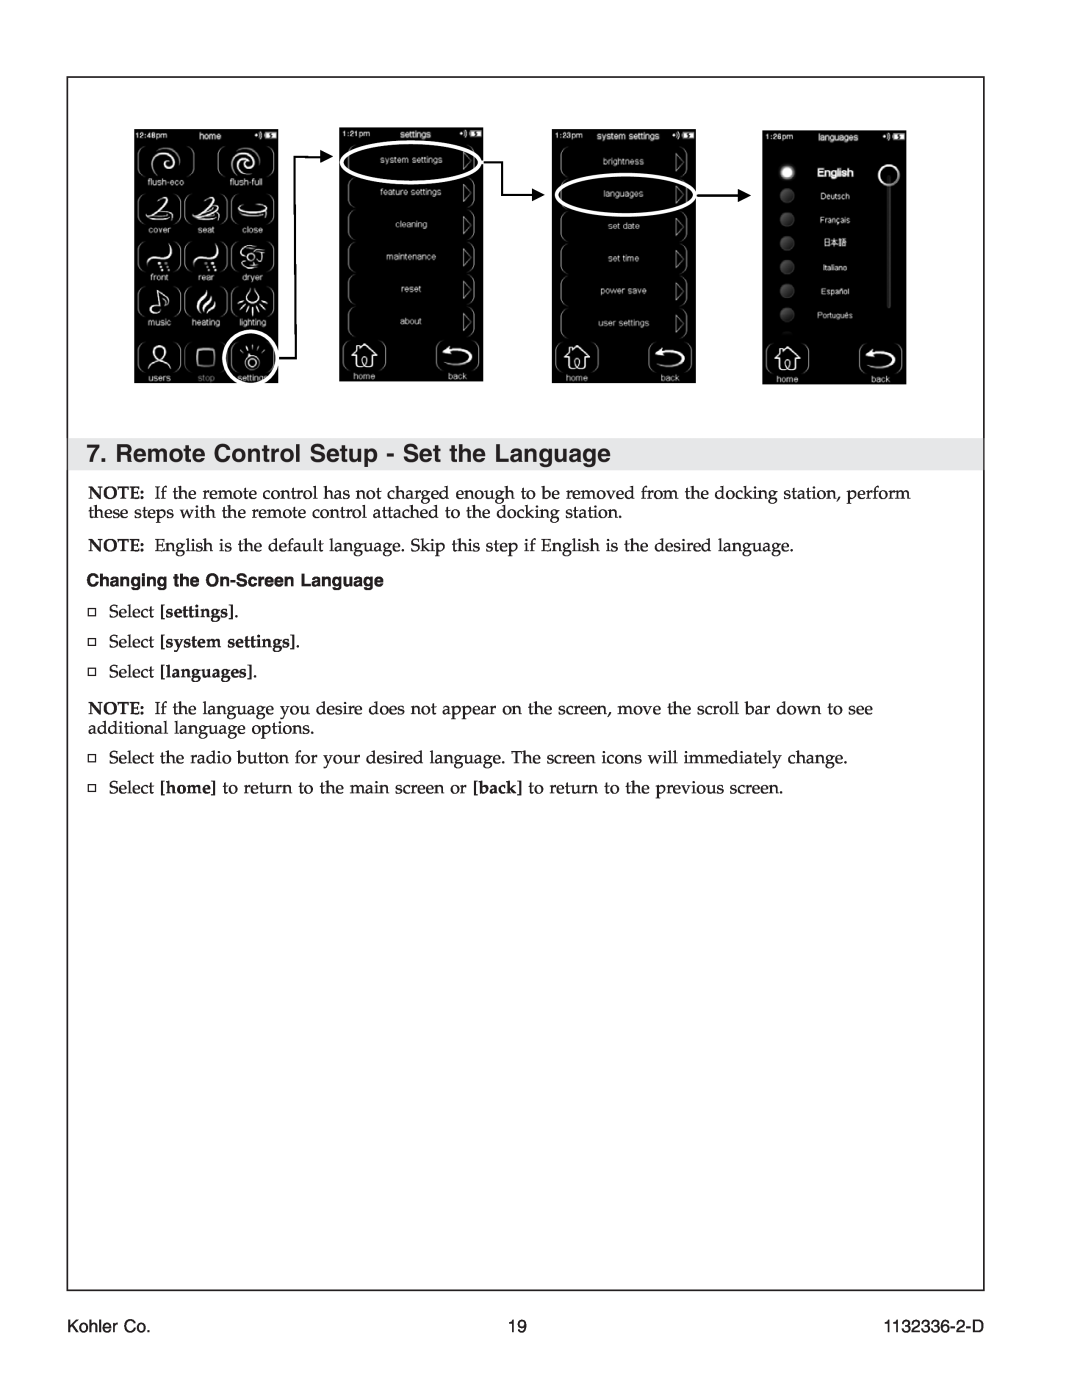 Kohler K-3900 manual Remote Control Setup - Set the Language, Changing the On-ScreenLanguage, Select languages, Kohler Co 